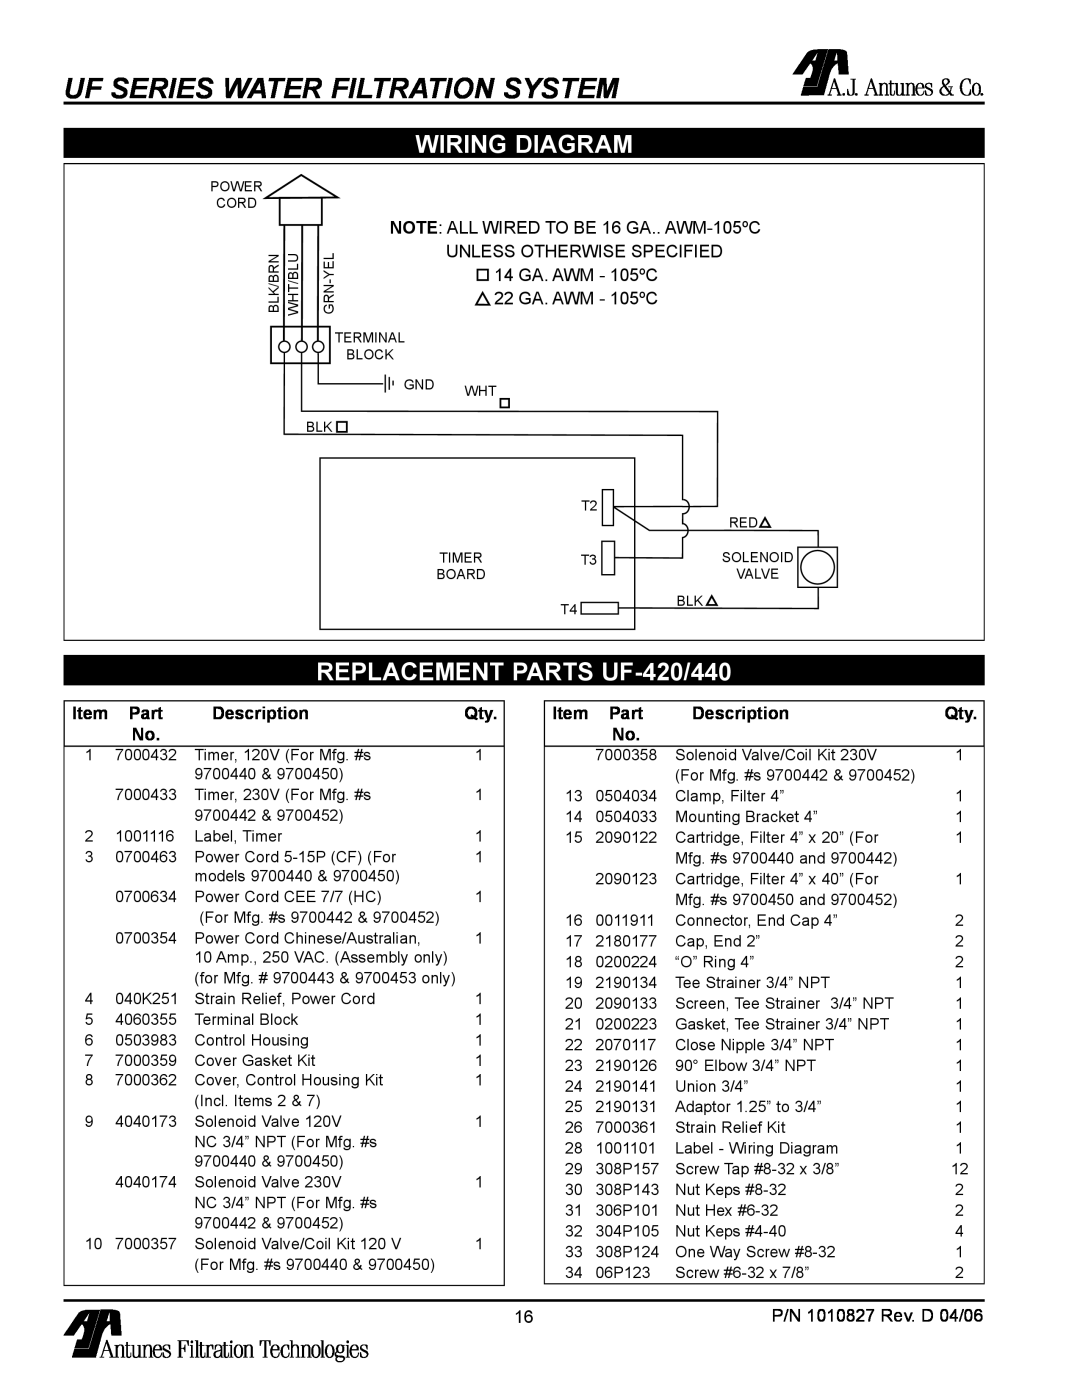 Antunes, AJ Wiring Diagram, REPLACEMENT PARTS UF-420/440, Part, Description, Uf Series Water Filtration System 